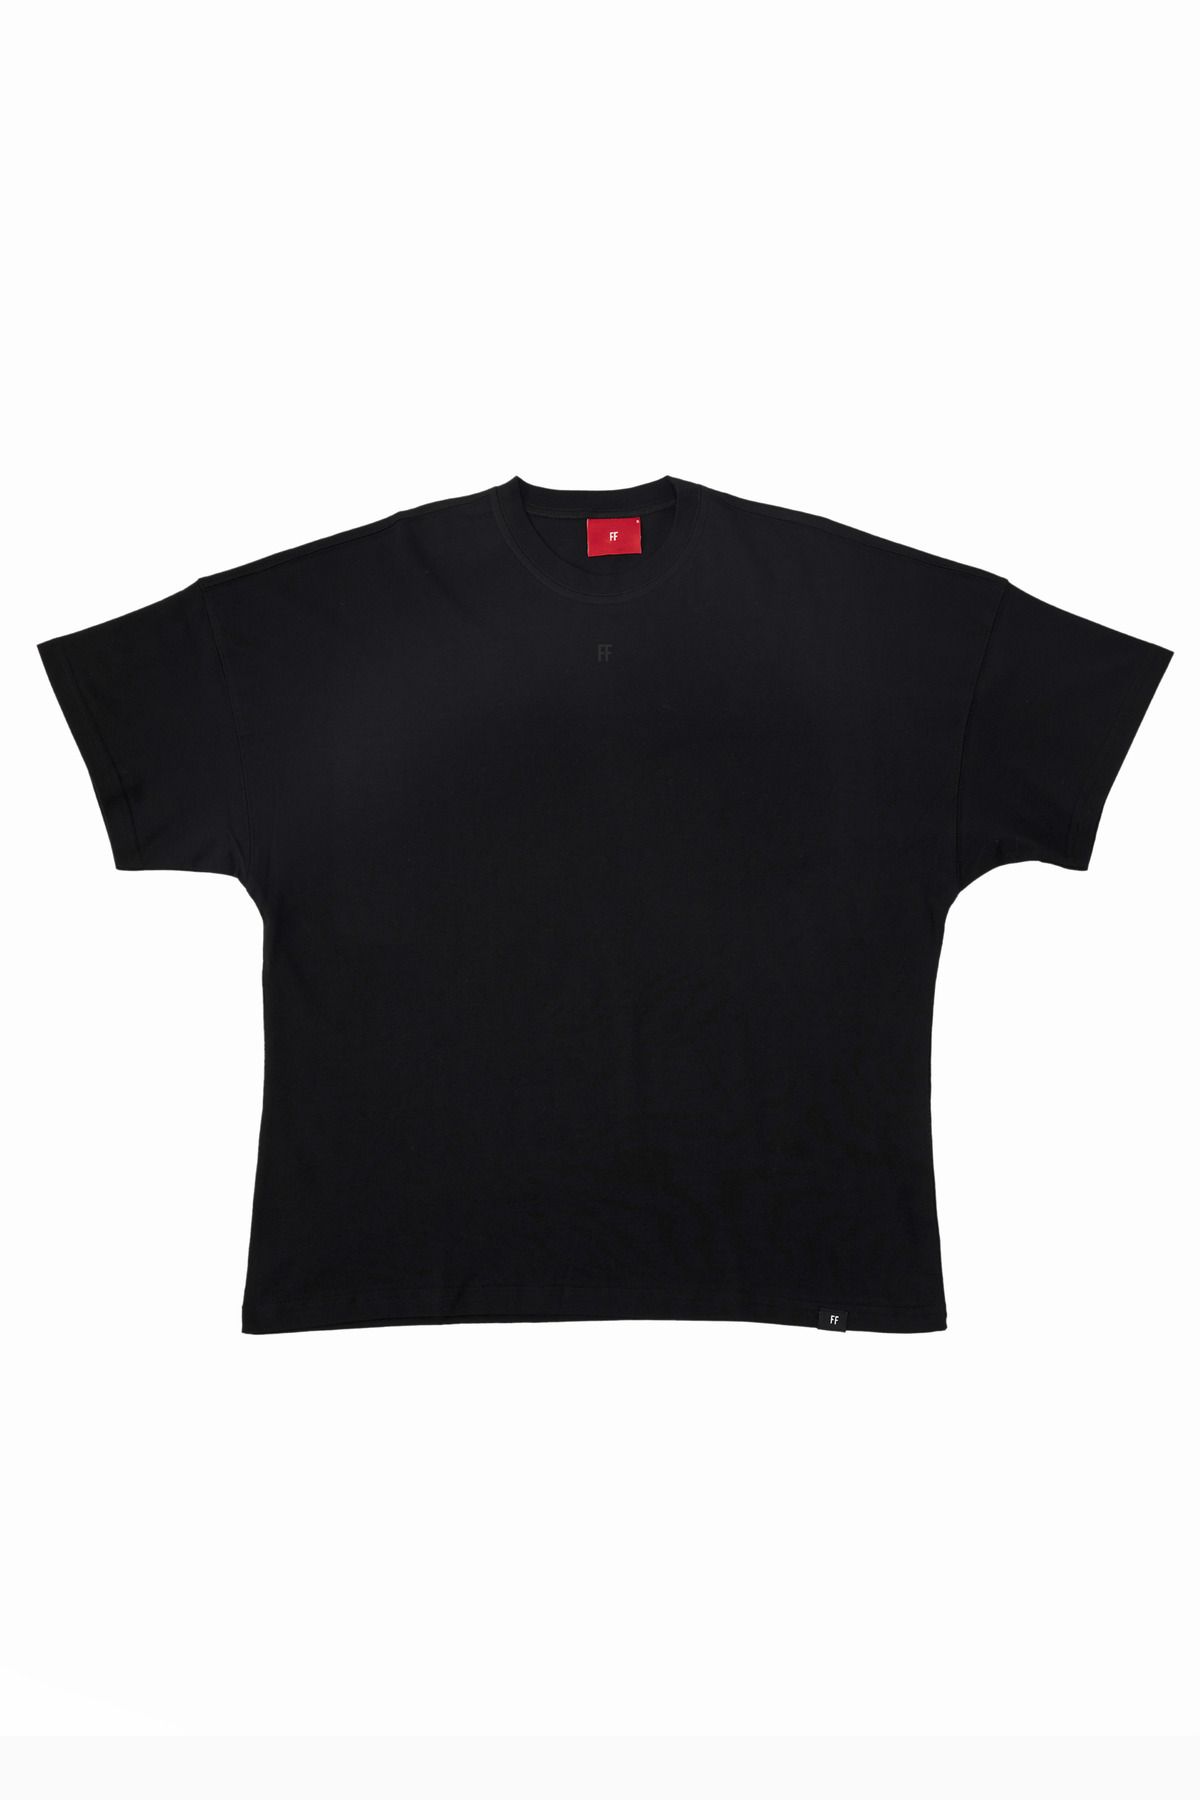 For Fun FF Essential / Drop Shoulder Oversize T-shirt